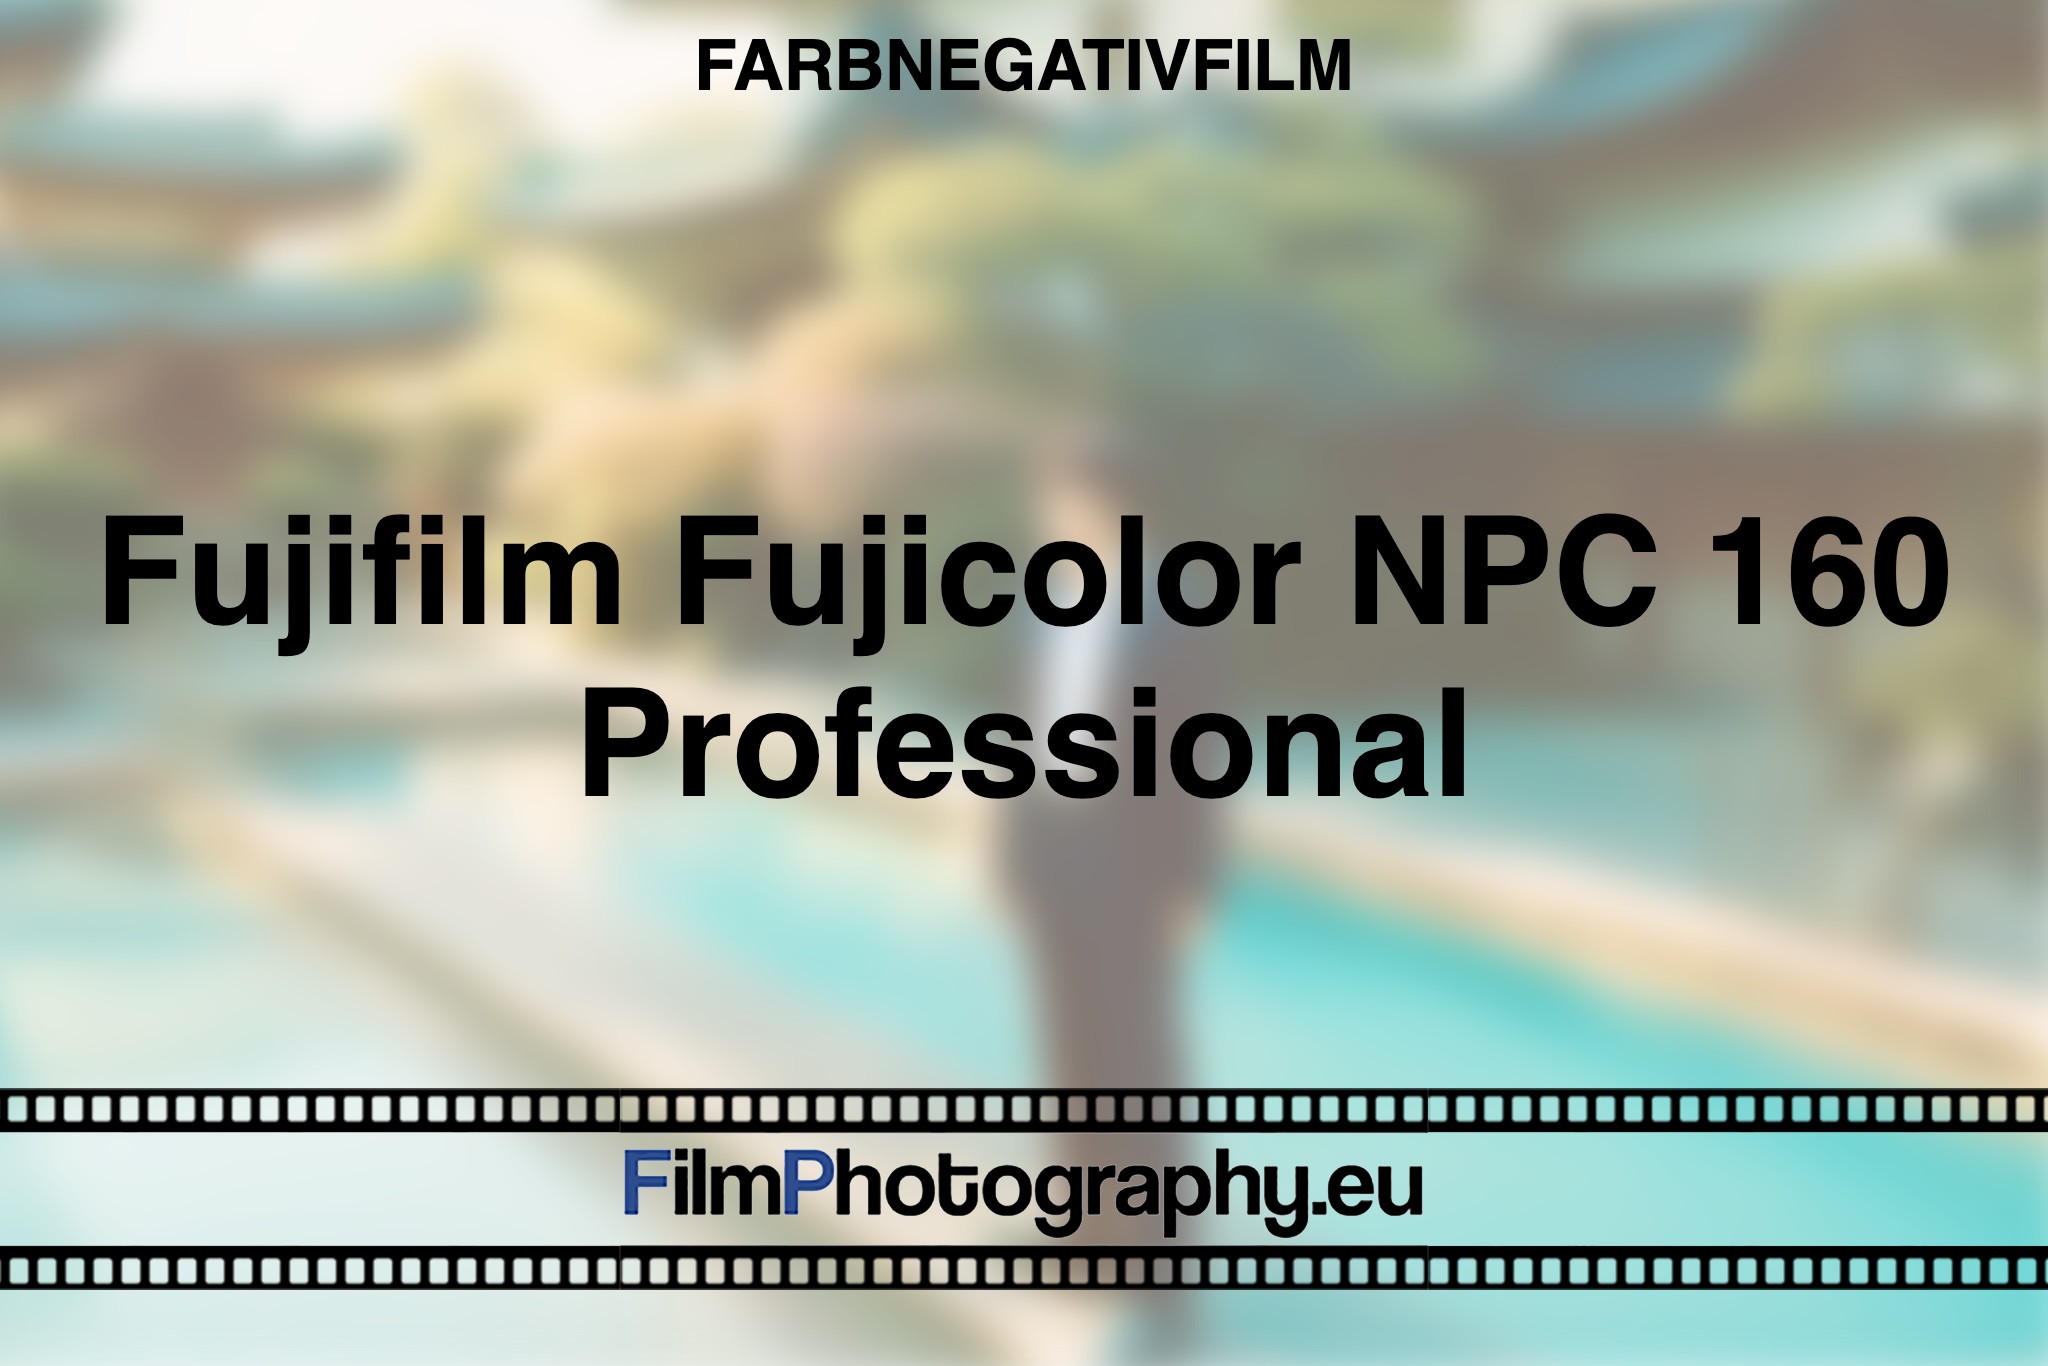 fujifilm-fujicolor-npc-160-professional-farbnegativfilm-bnv